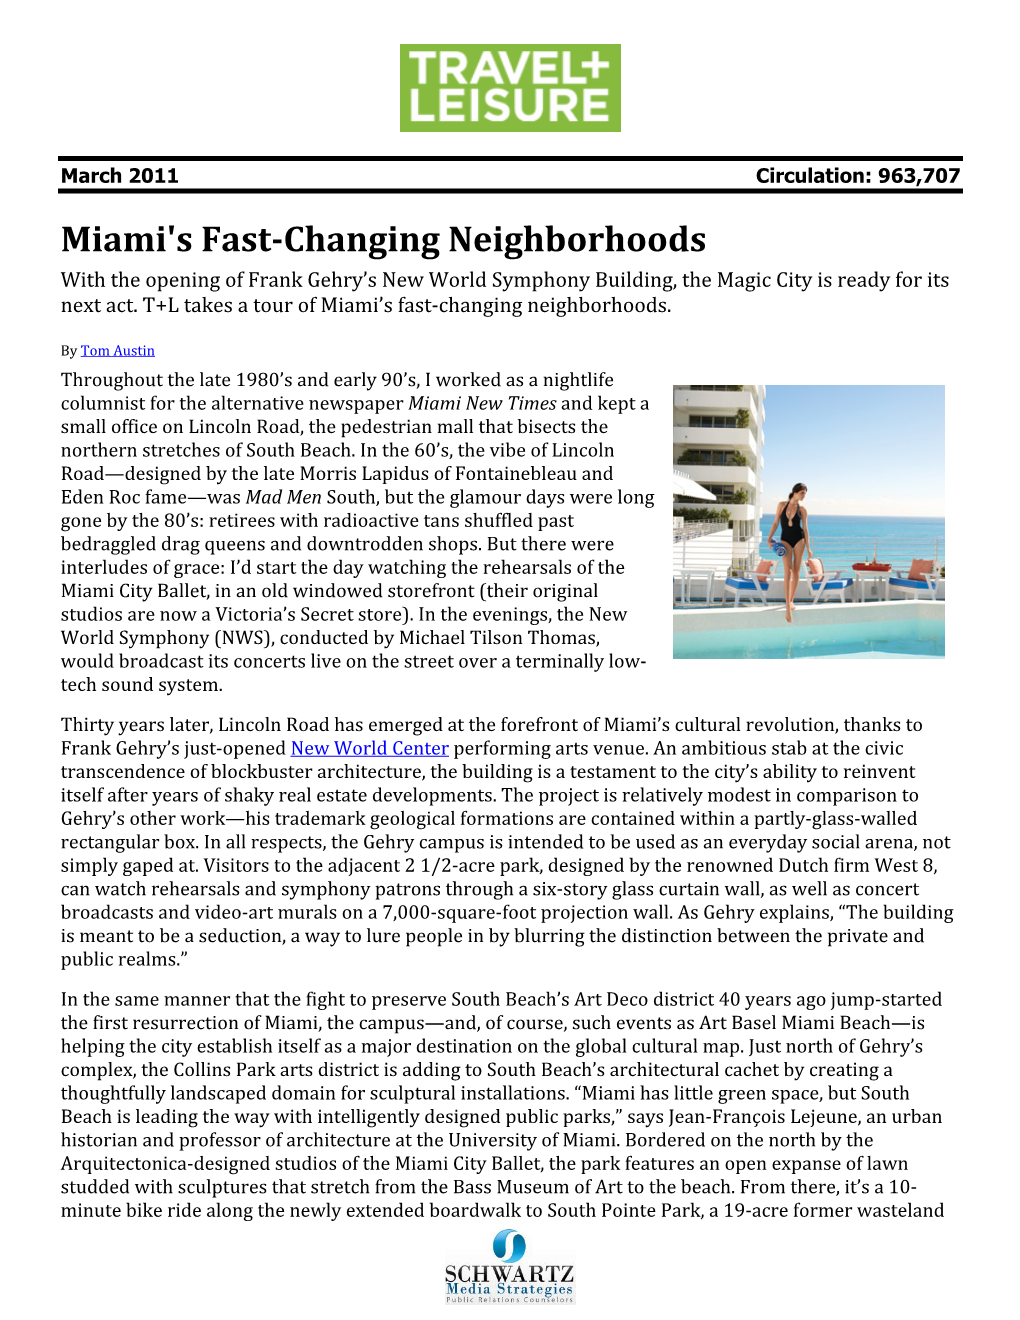 Miami's Fast-Changing Neighborhoods